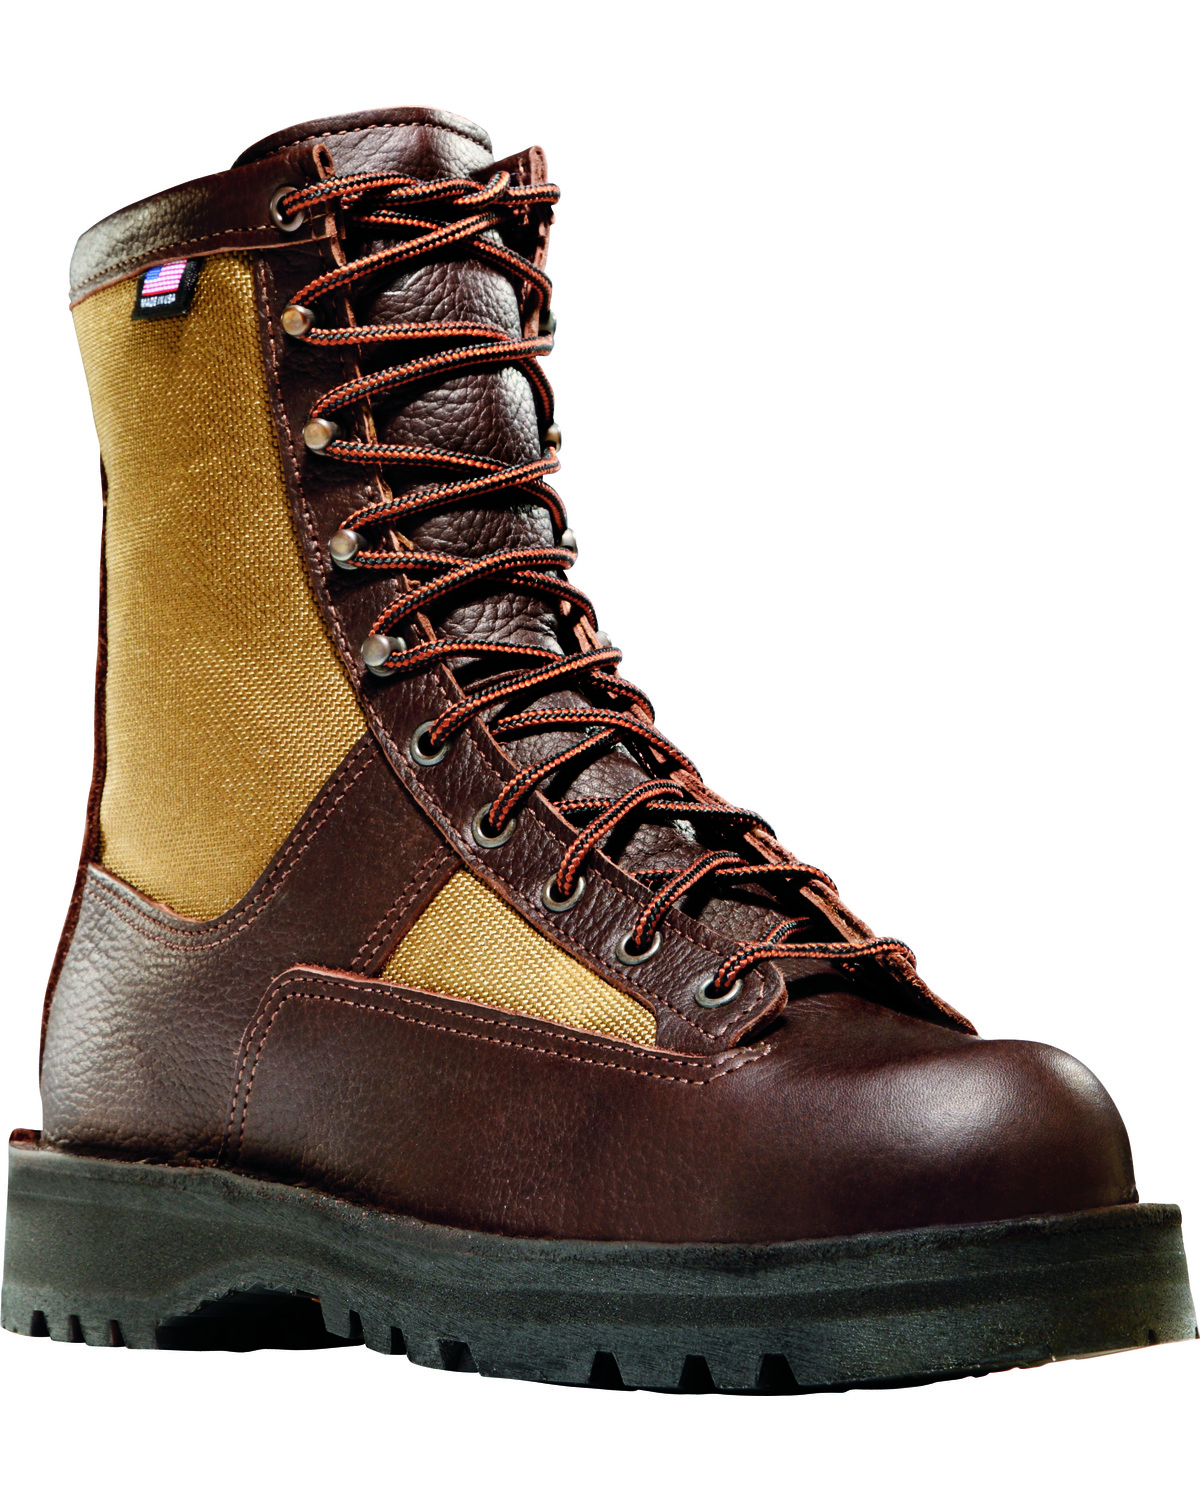 Danner Men's Brown Sierra 8" Hunting Boots - Round Toe